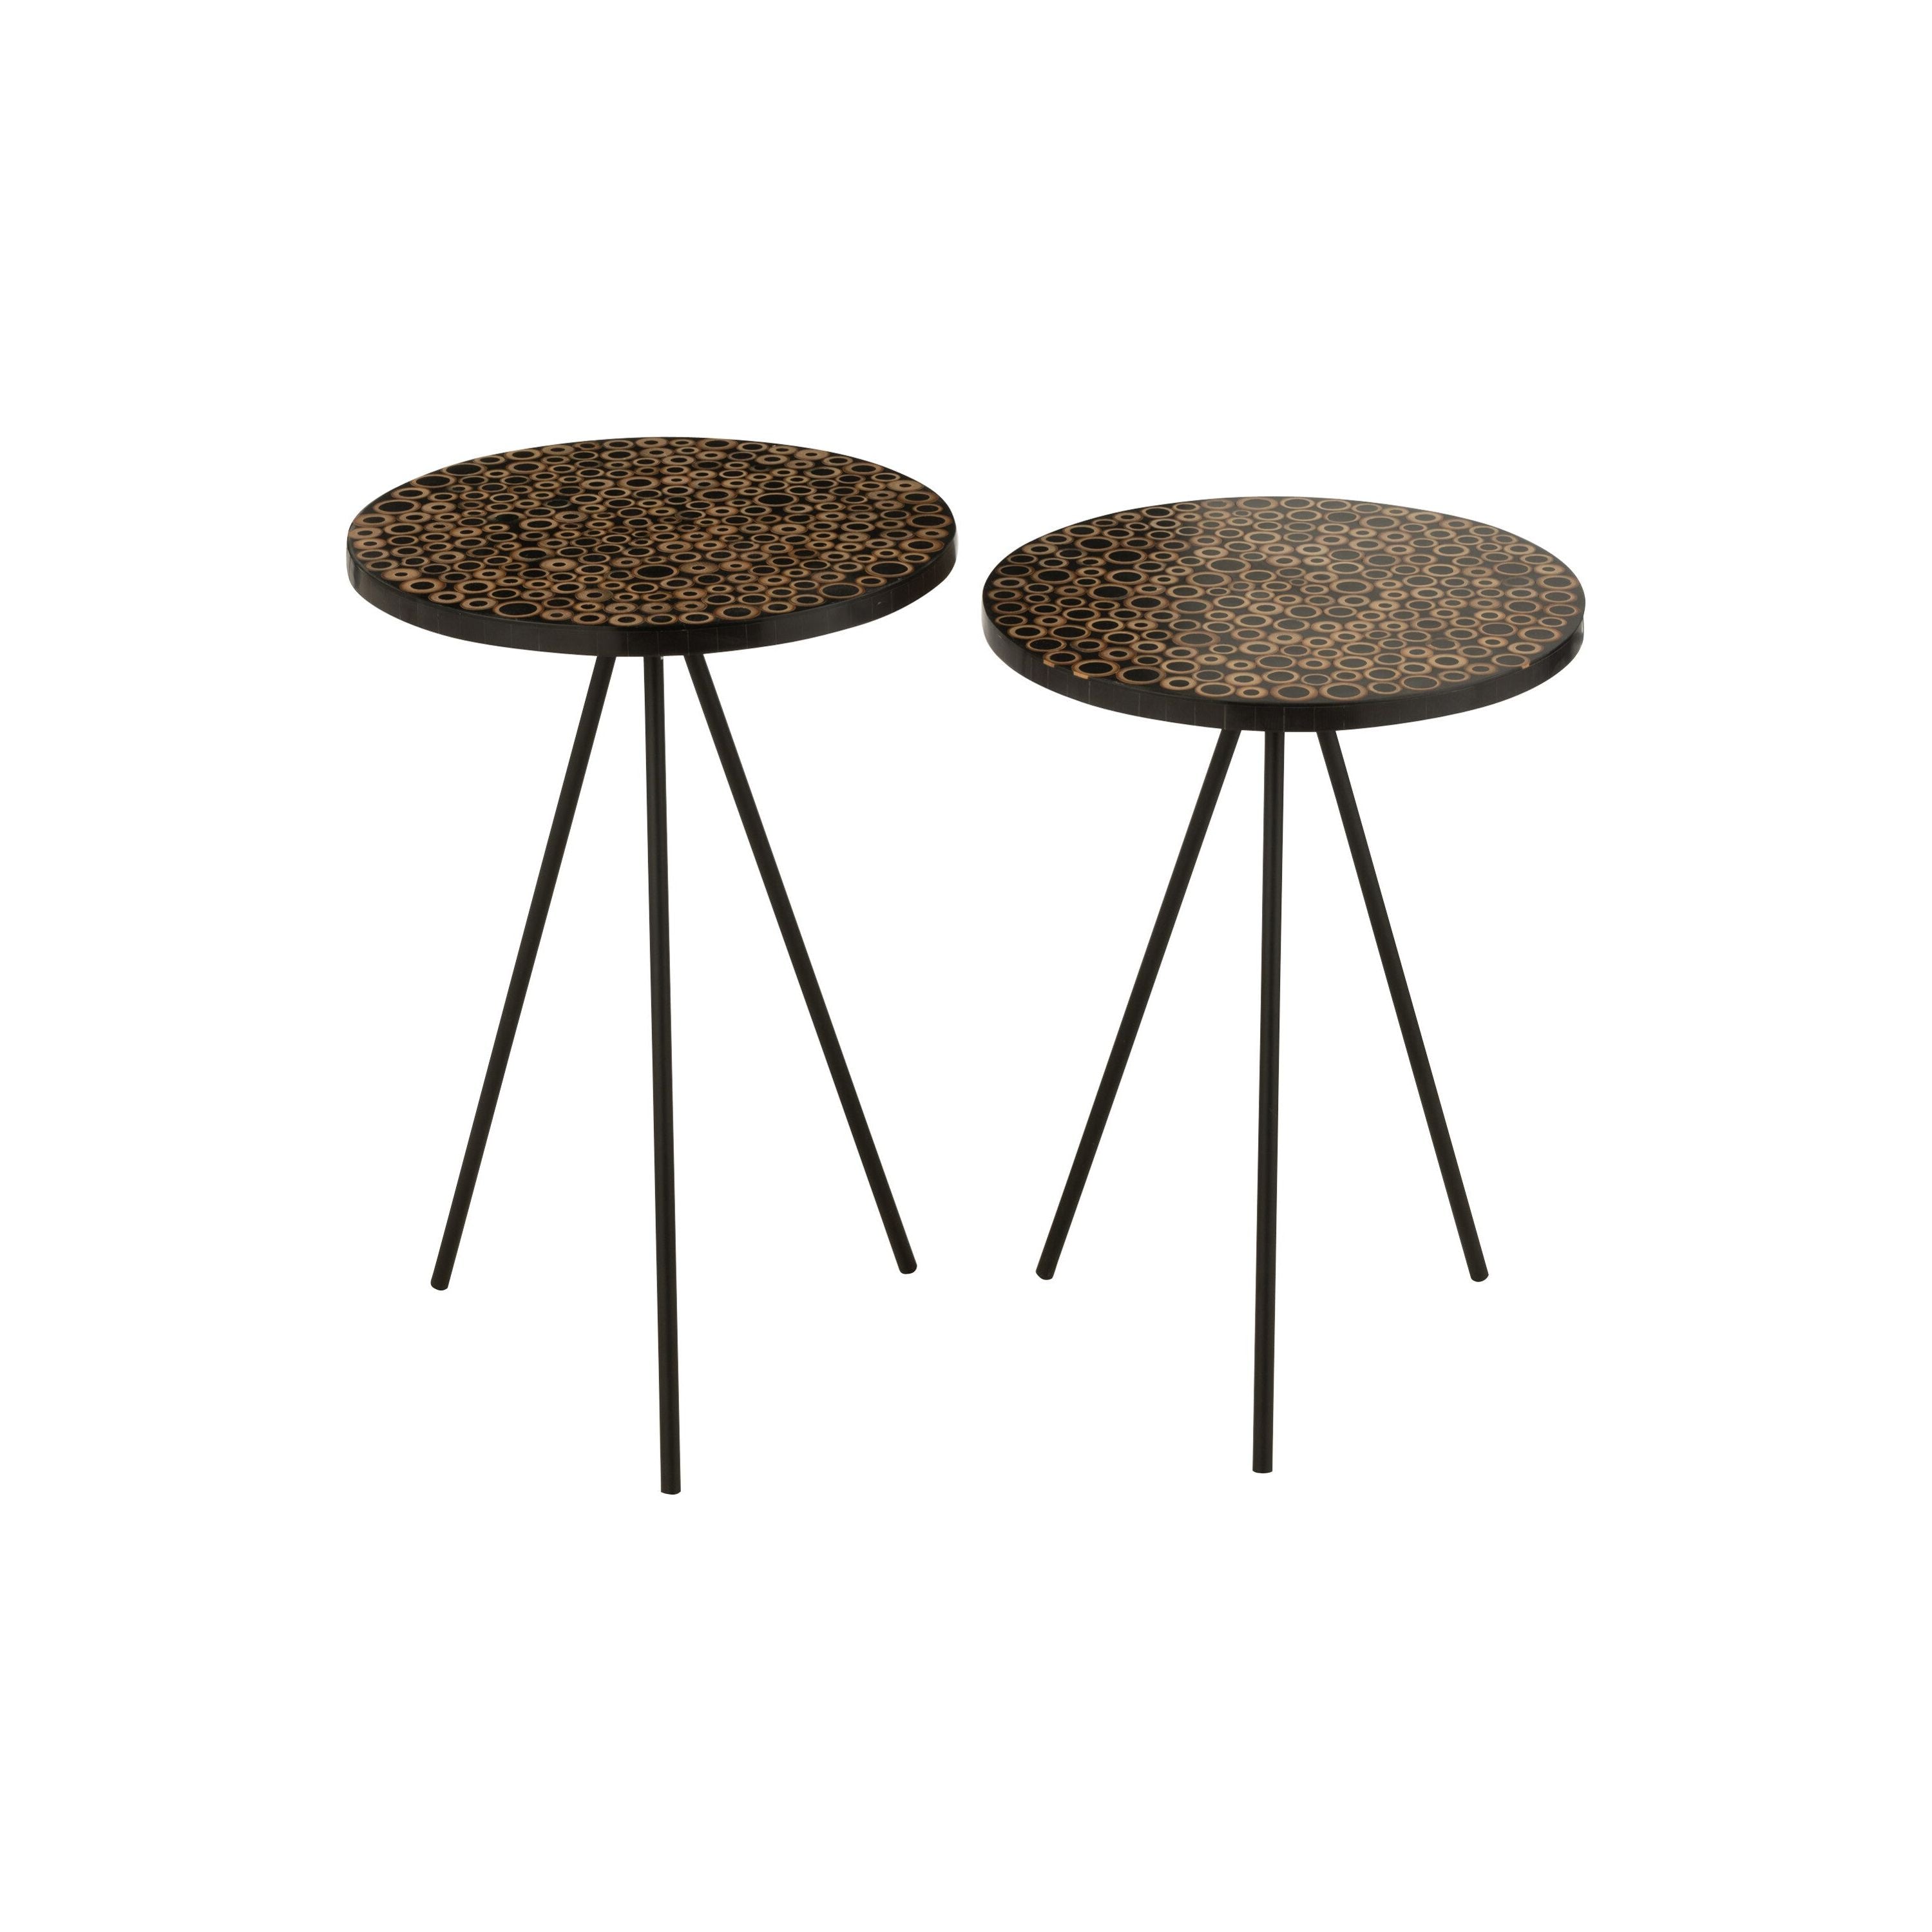 Set Of Two Side Table Rings Resine Brown/black